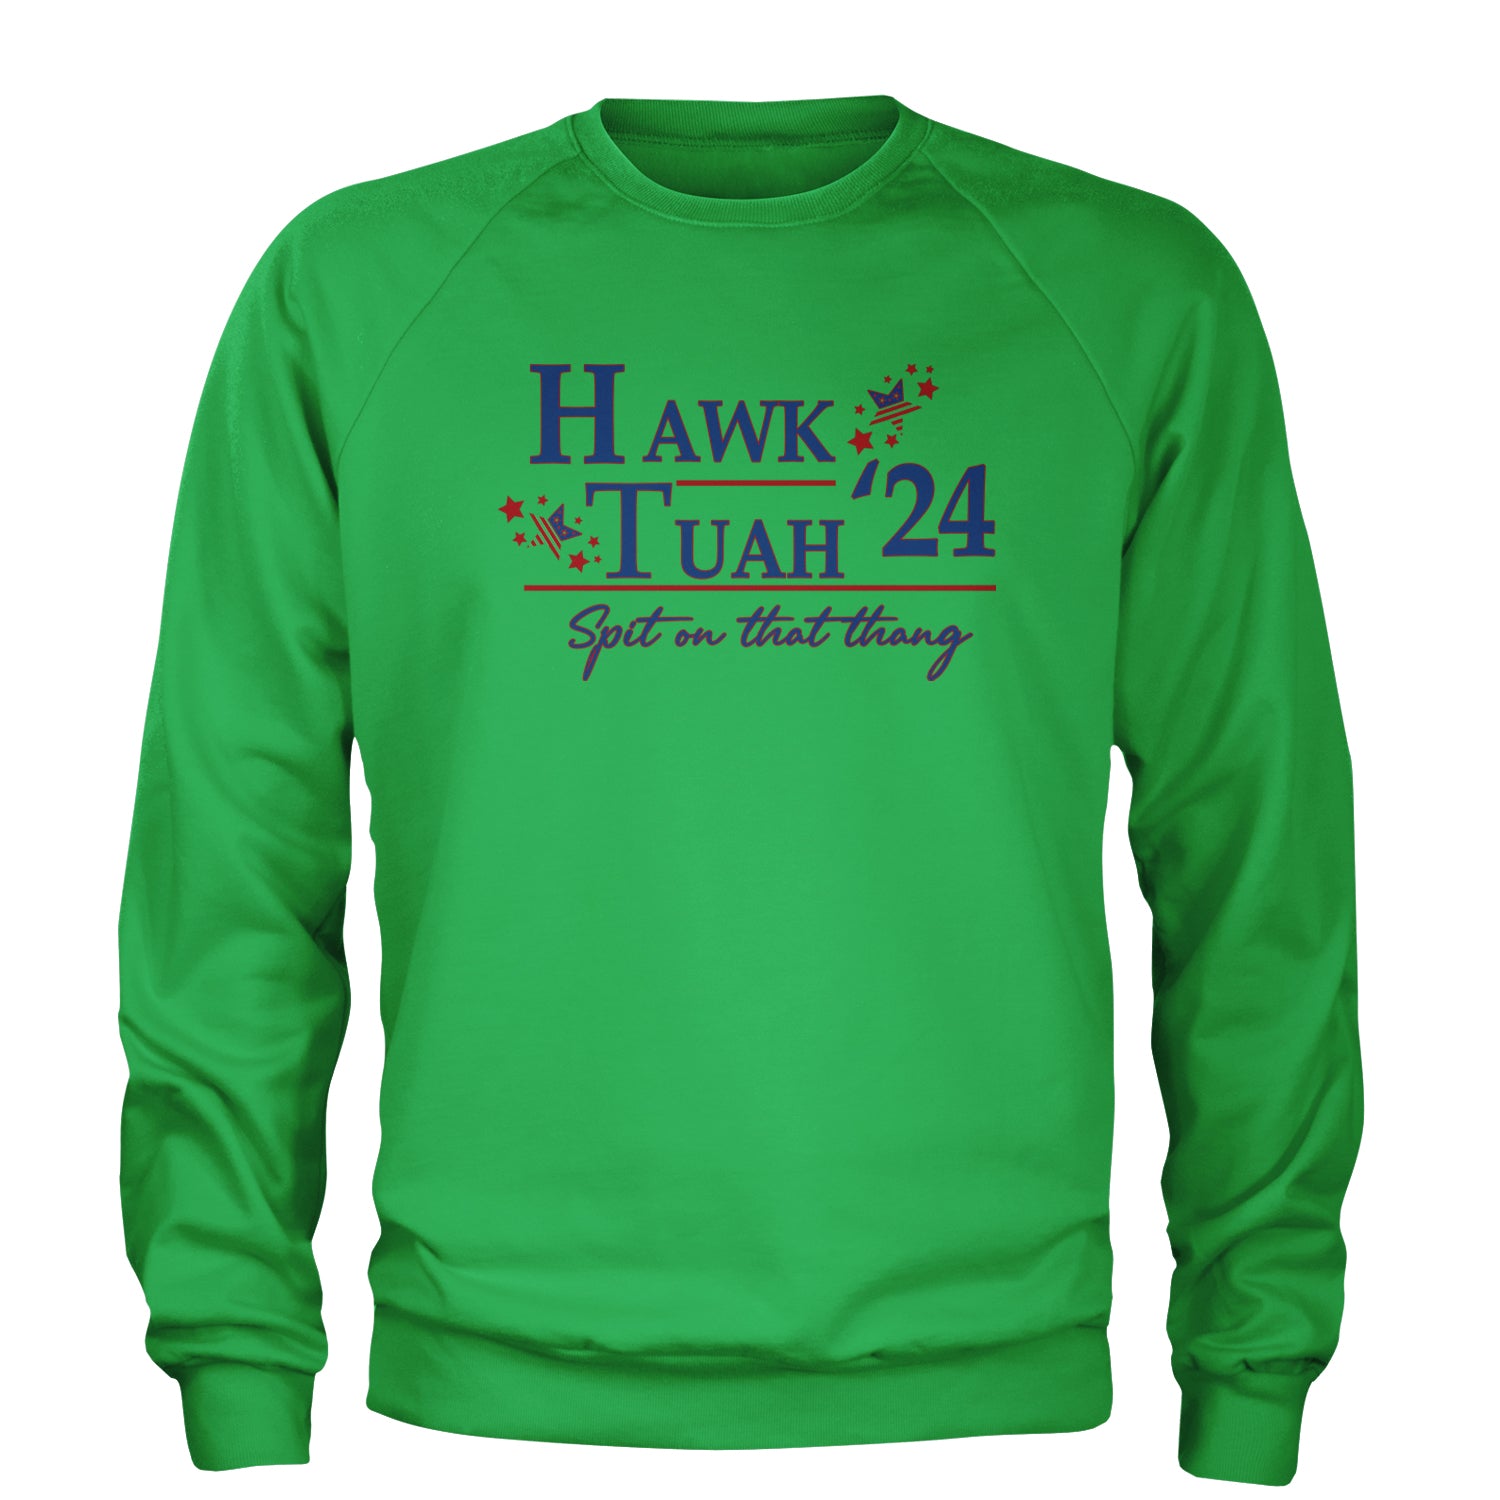 Vote For Hawk Tuah Spit On That Thang 2024 Adult Crewneck Sweatshirt Heather Grey